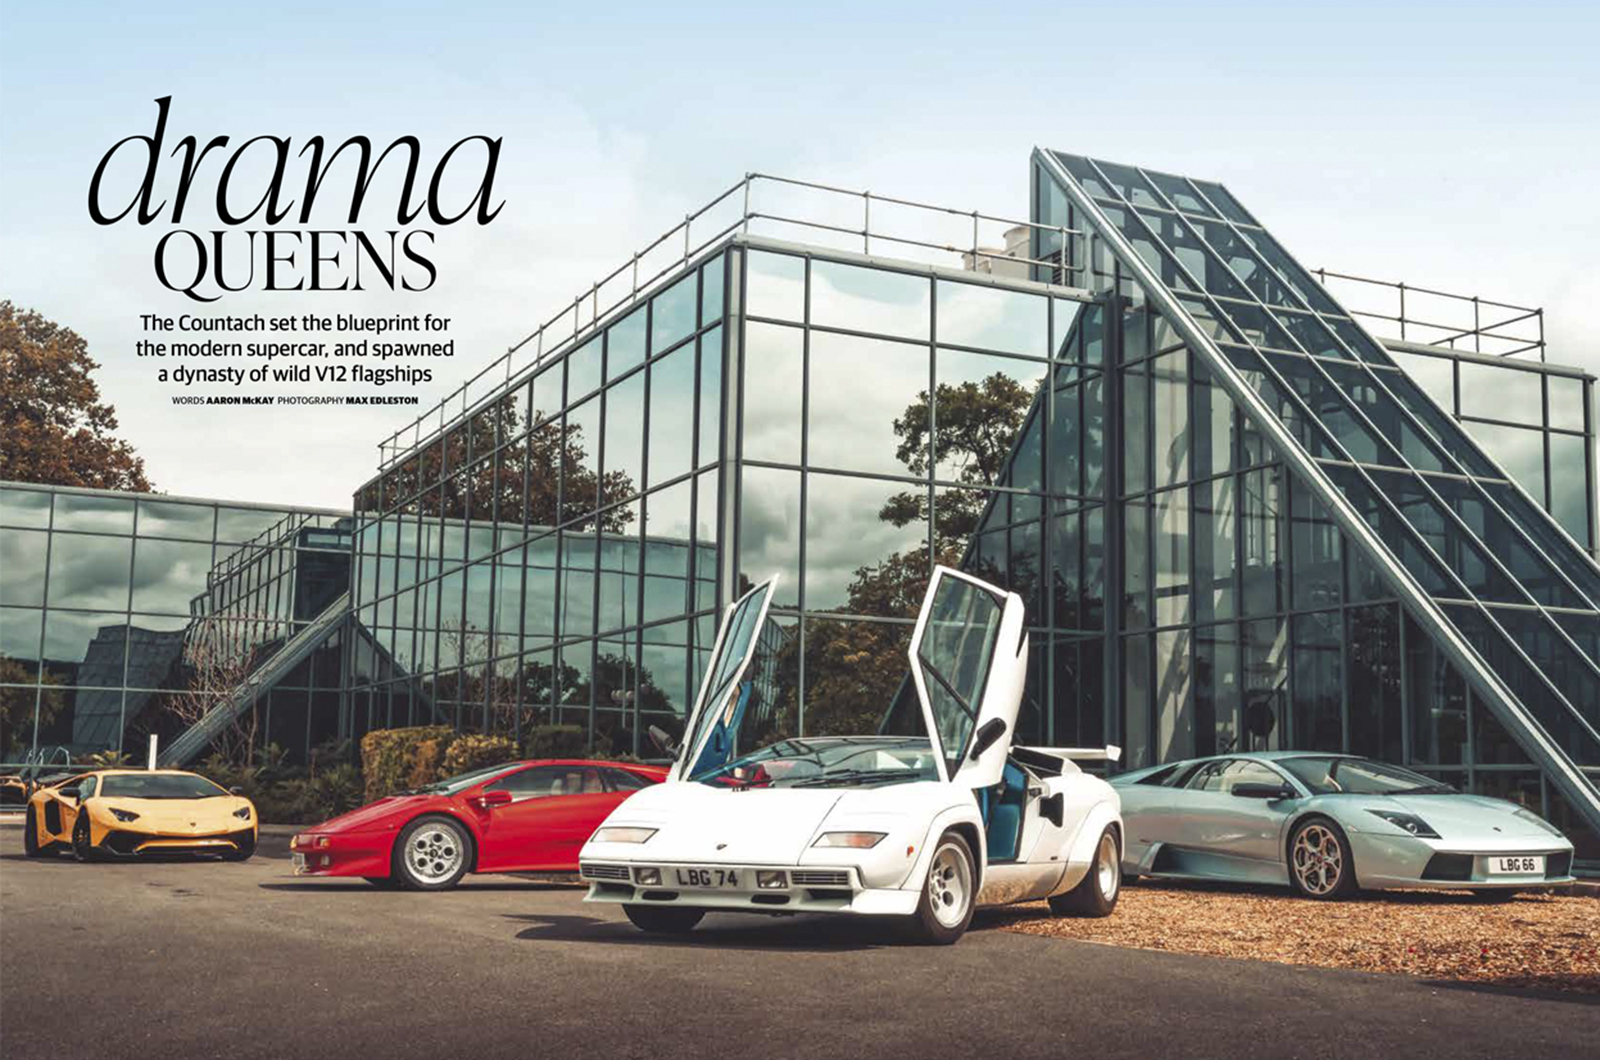 Classic & Sports Car – Lamborghini at 60: inside the December 2023 issue of Classic & Sports Car